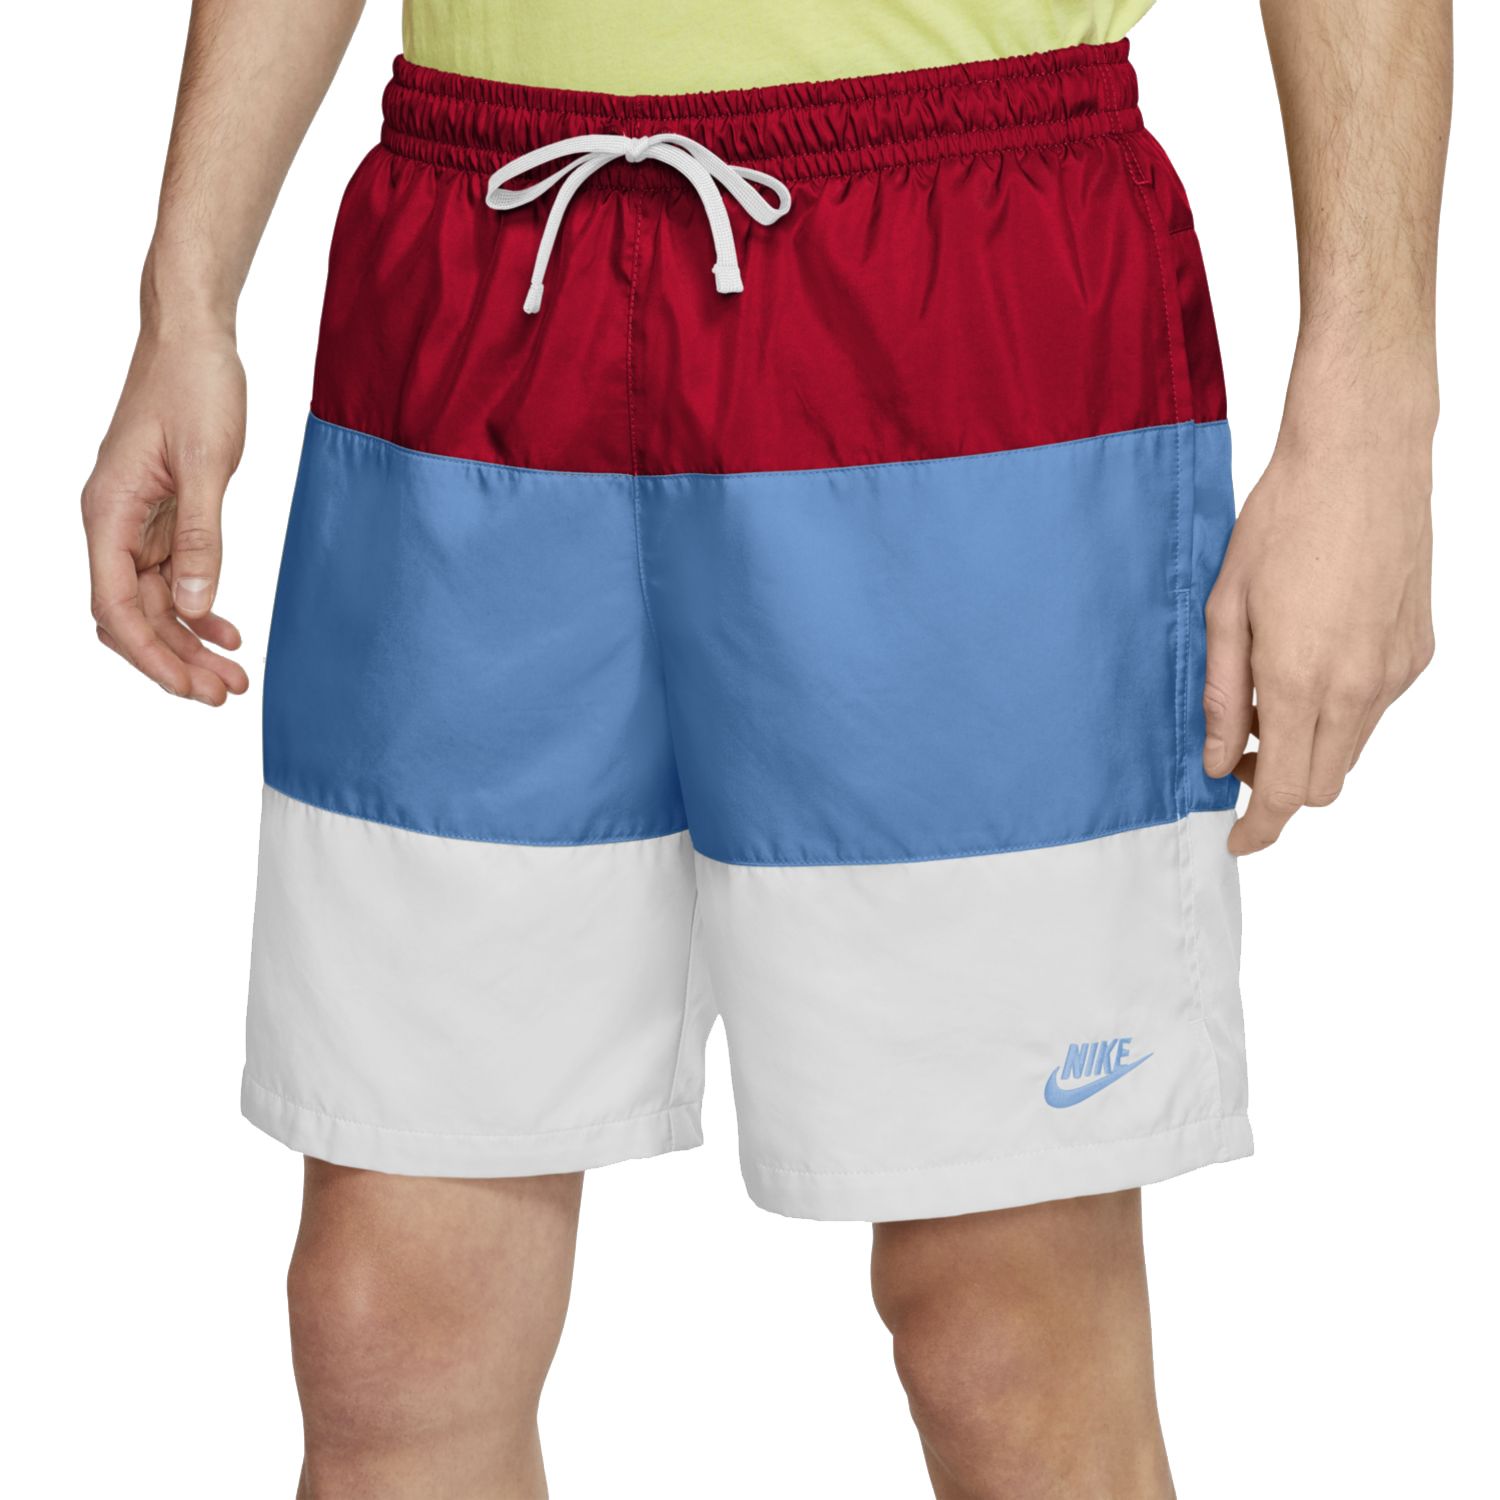 Short edition. Nike Woven shorts. Шорты Nike m Sportswear Essentials+ French Terry shorts. Foot Locker шорты. Шорты Nike Woven Oversized.